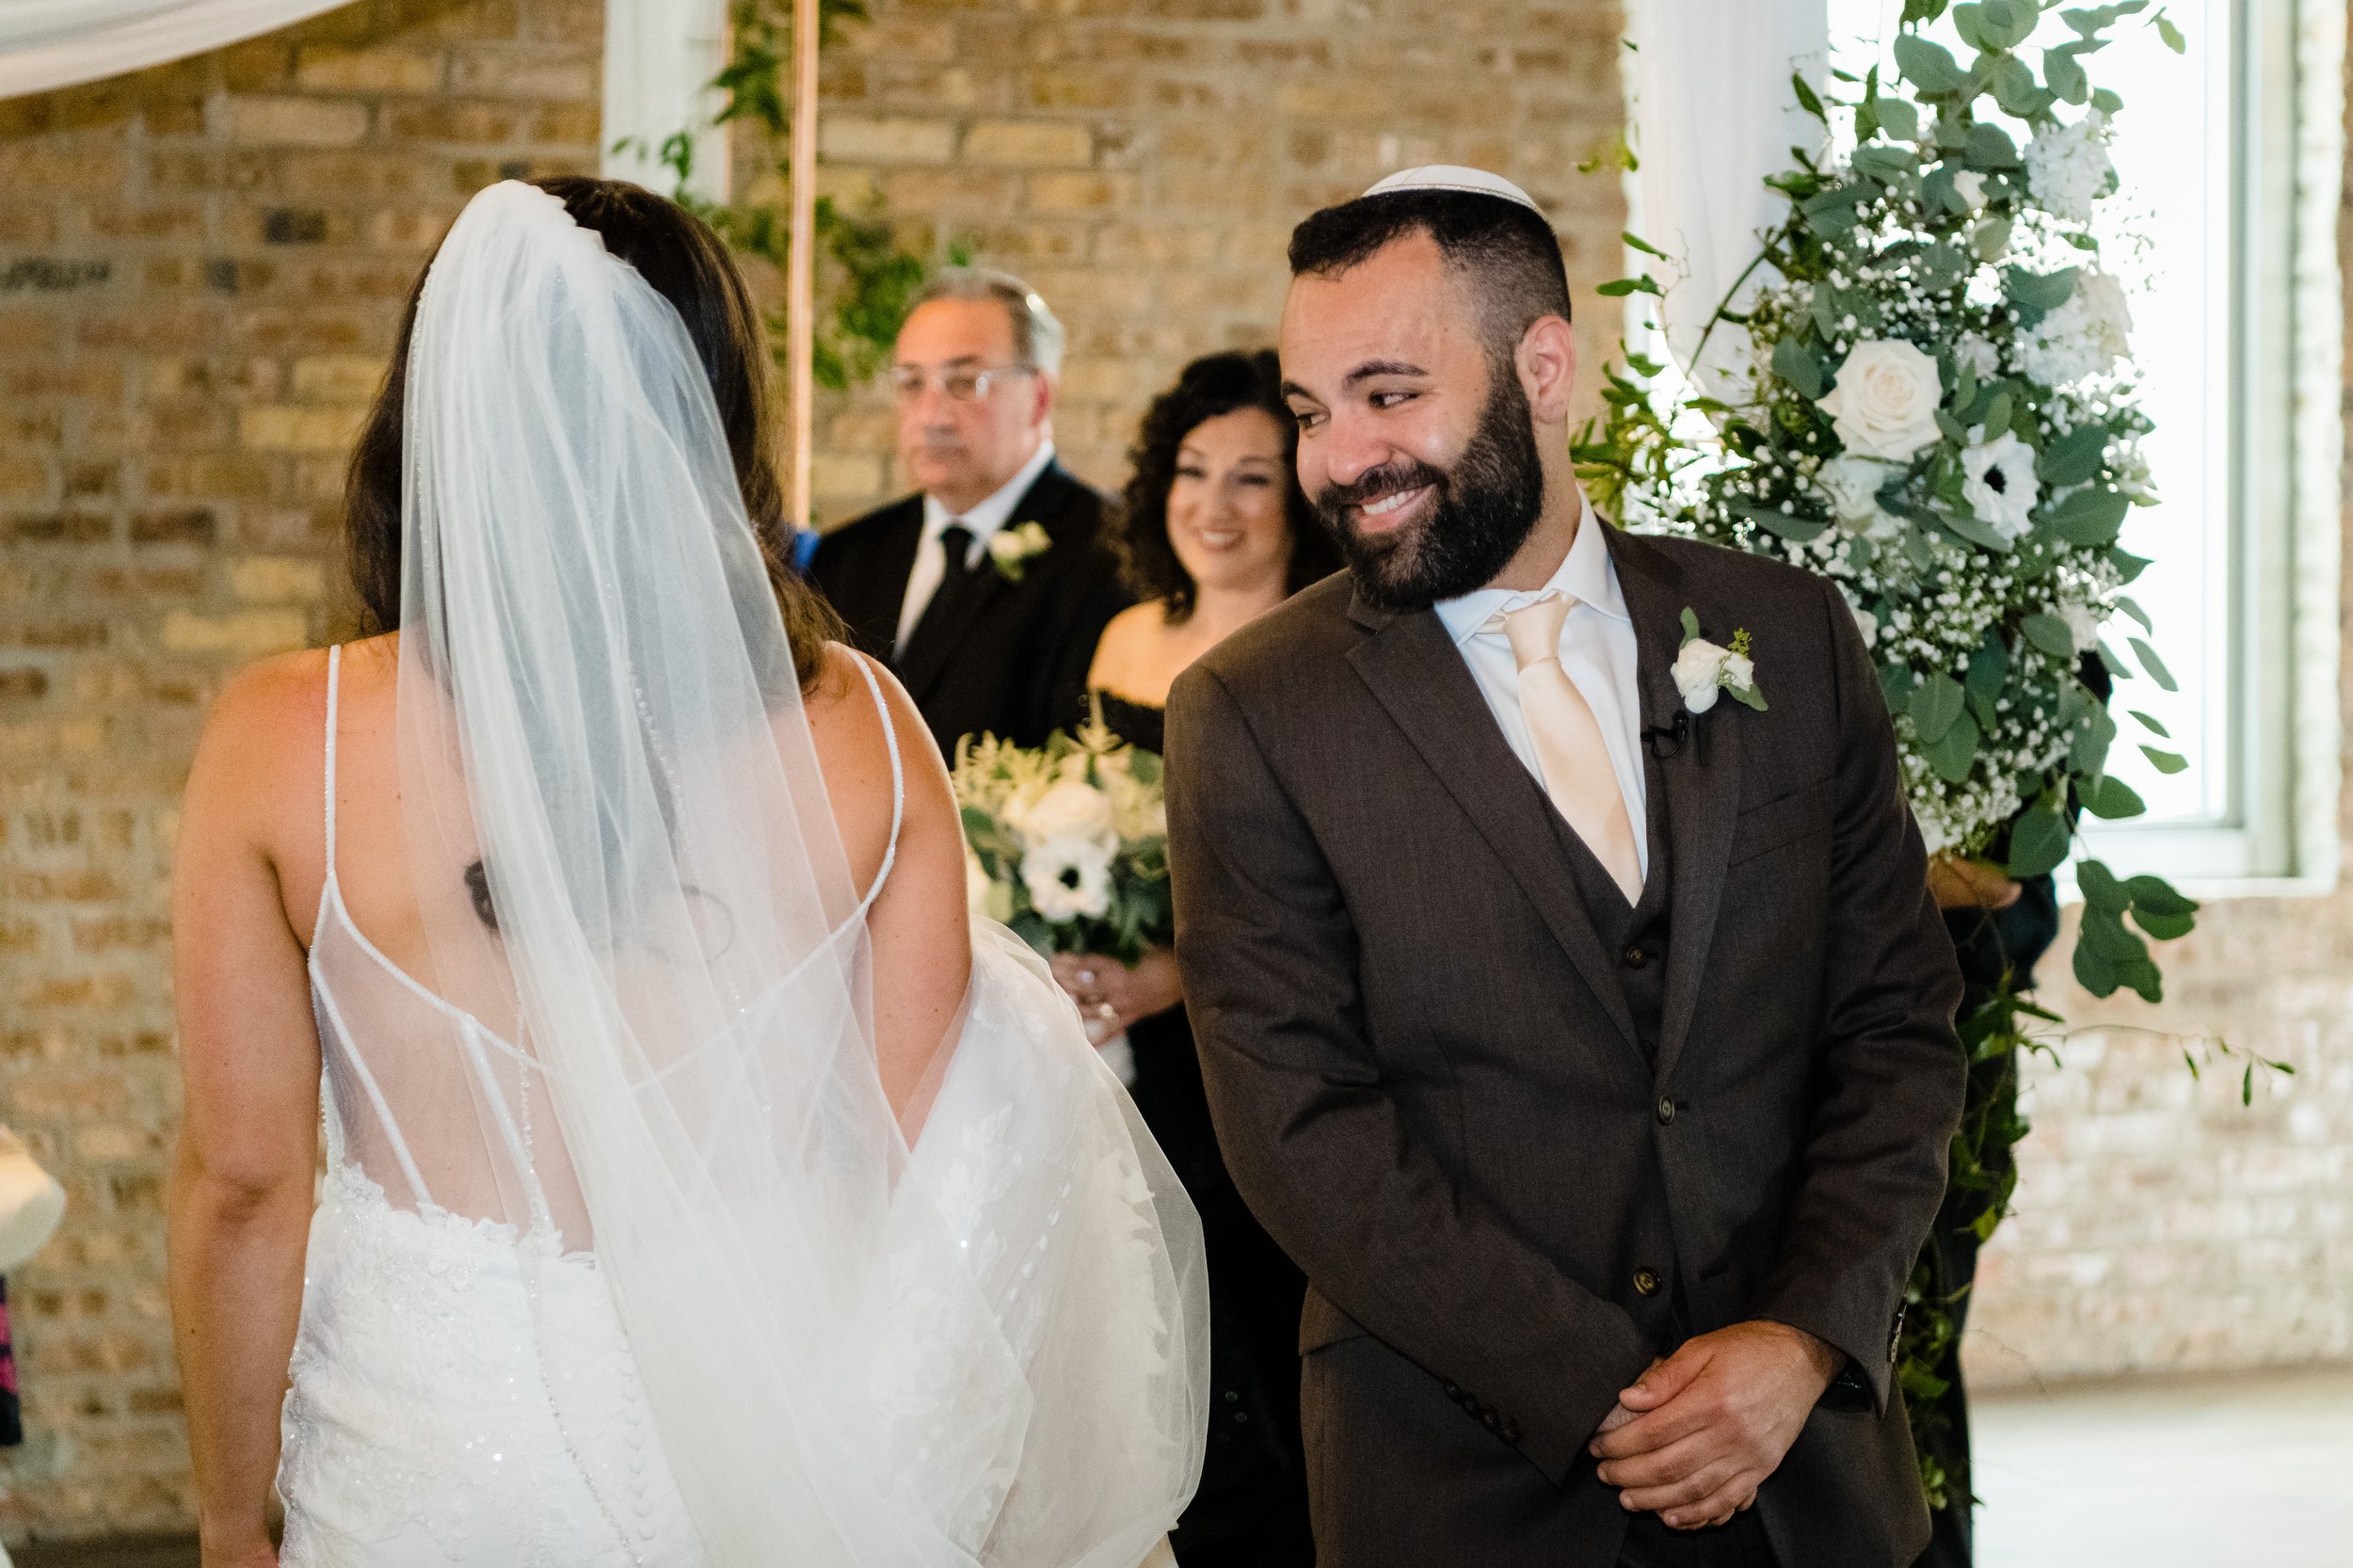 Artifact Events | Indoor Jewish Wedding Ceremony | Chicago IL